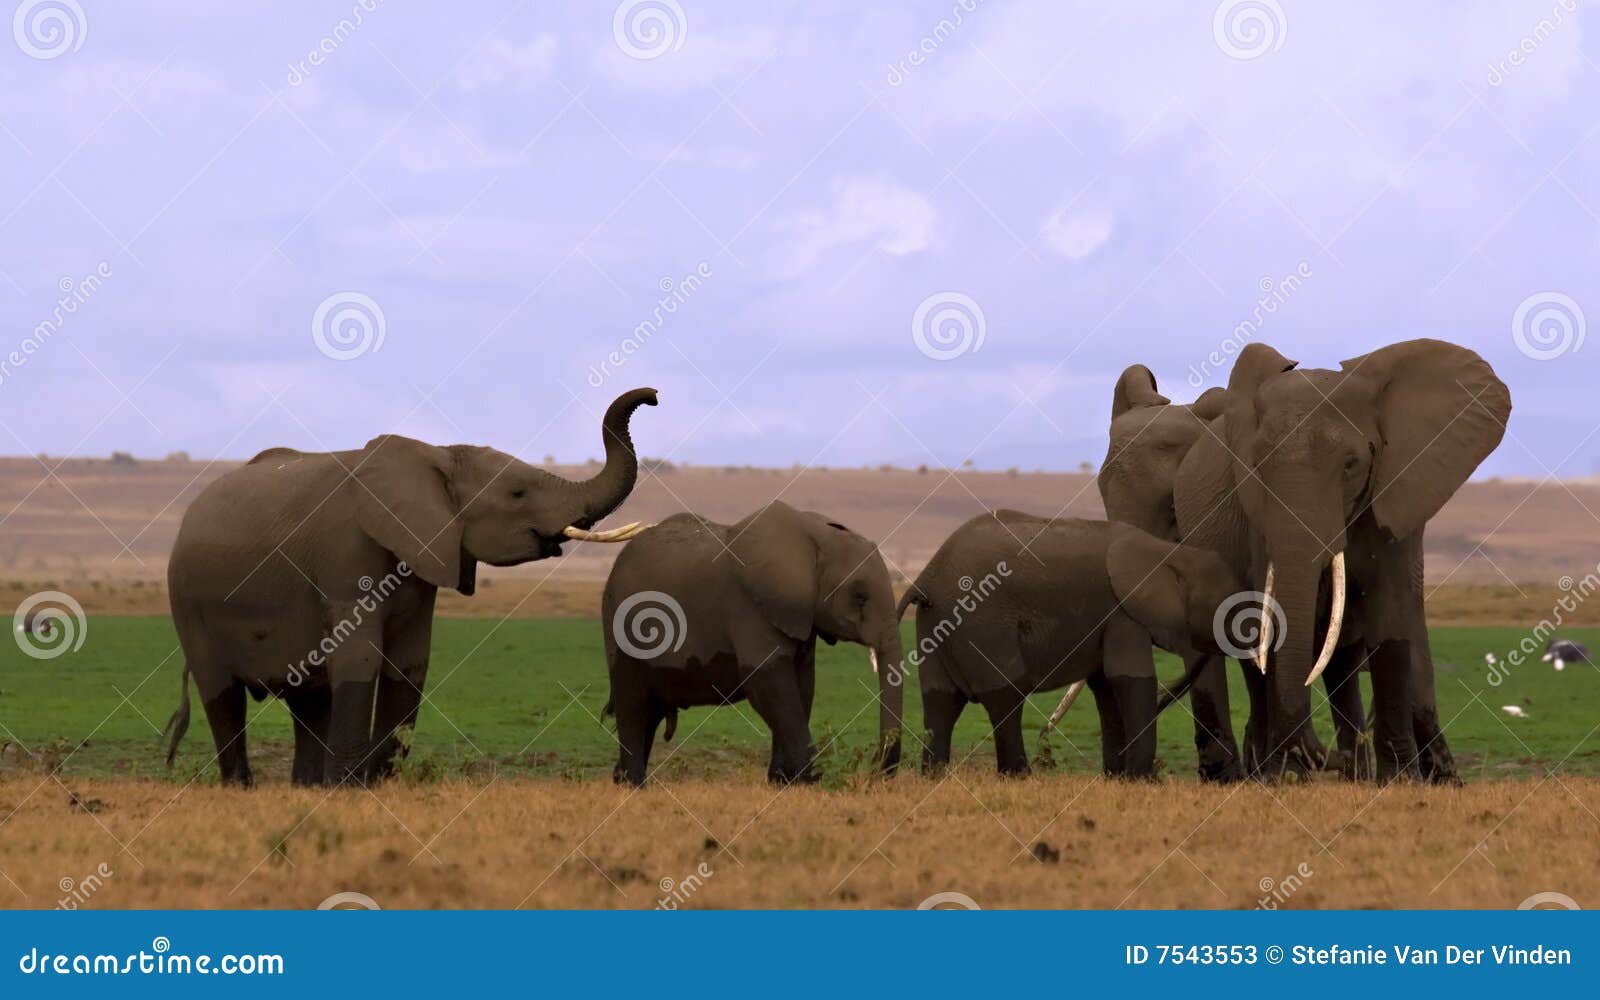 elephant herd in amboseli